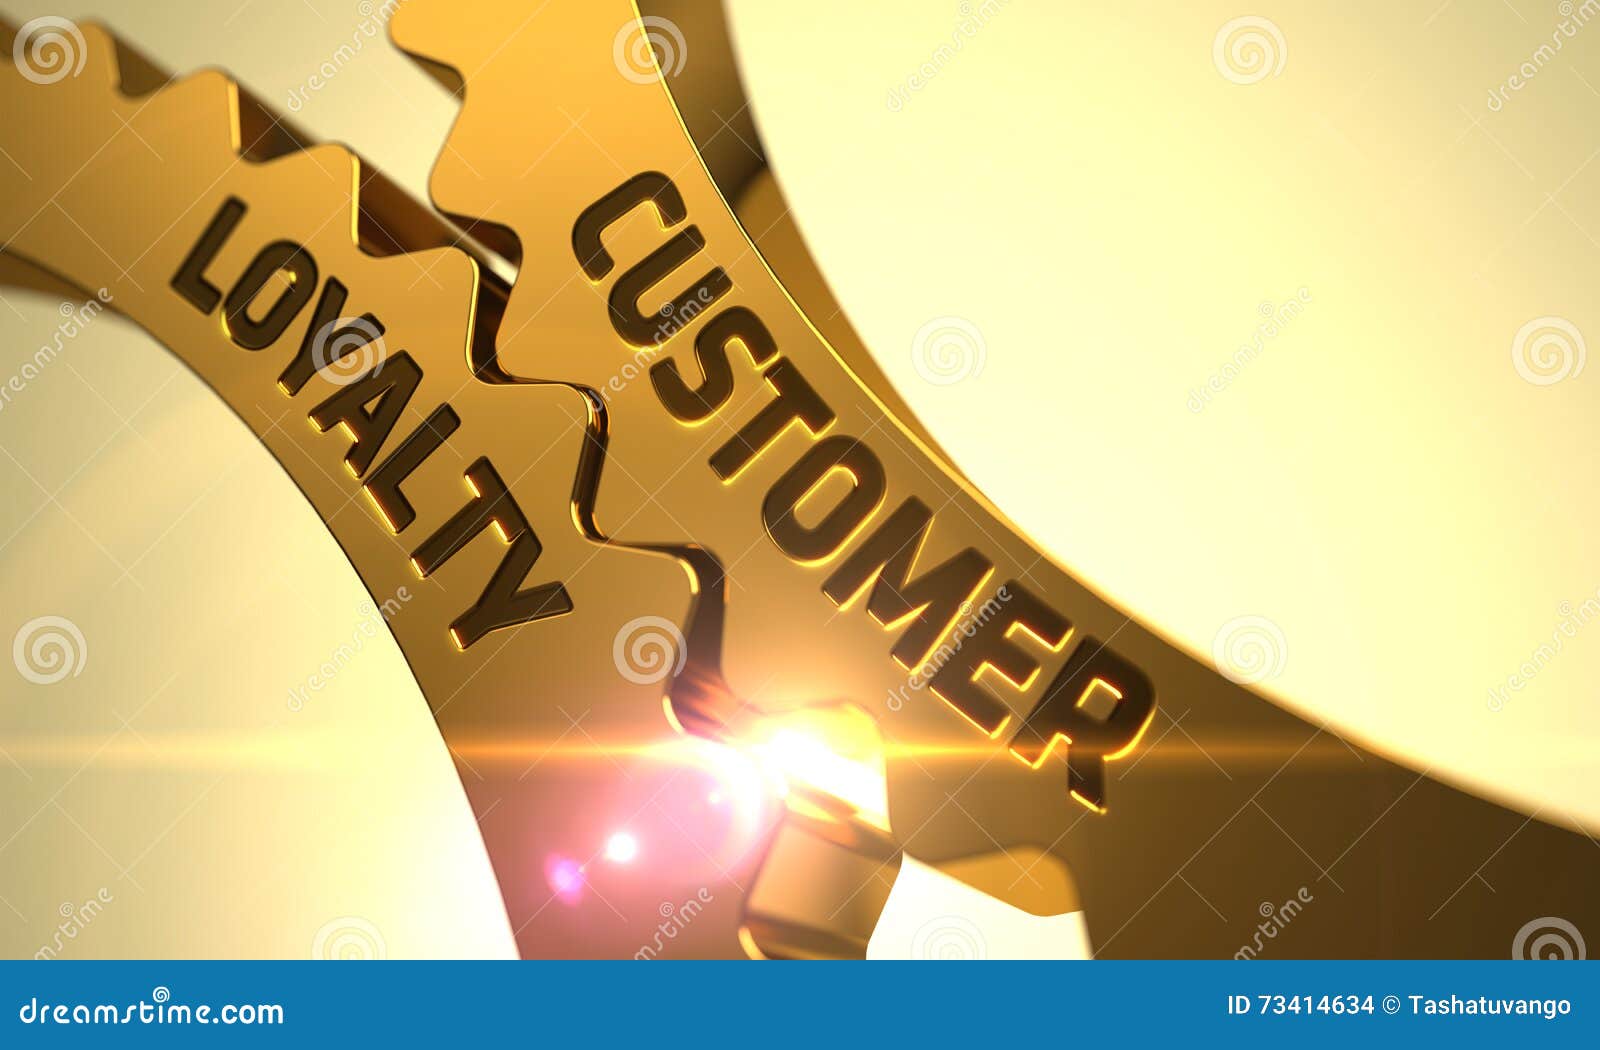 customer loyalty concept. golden cog gears.